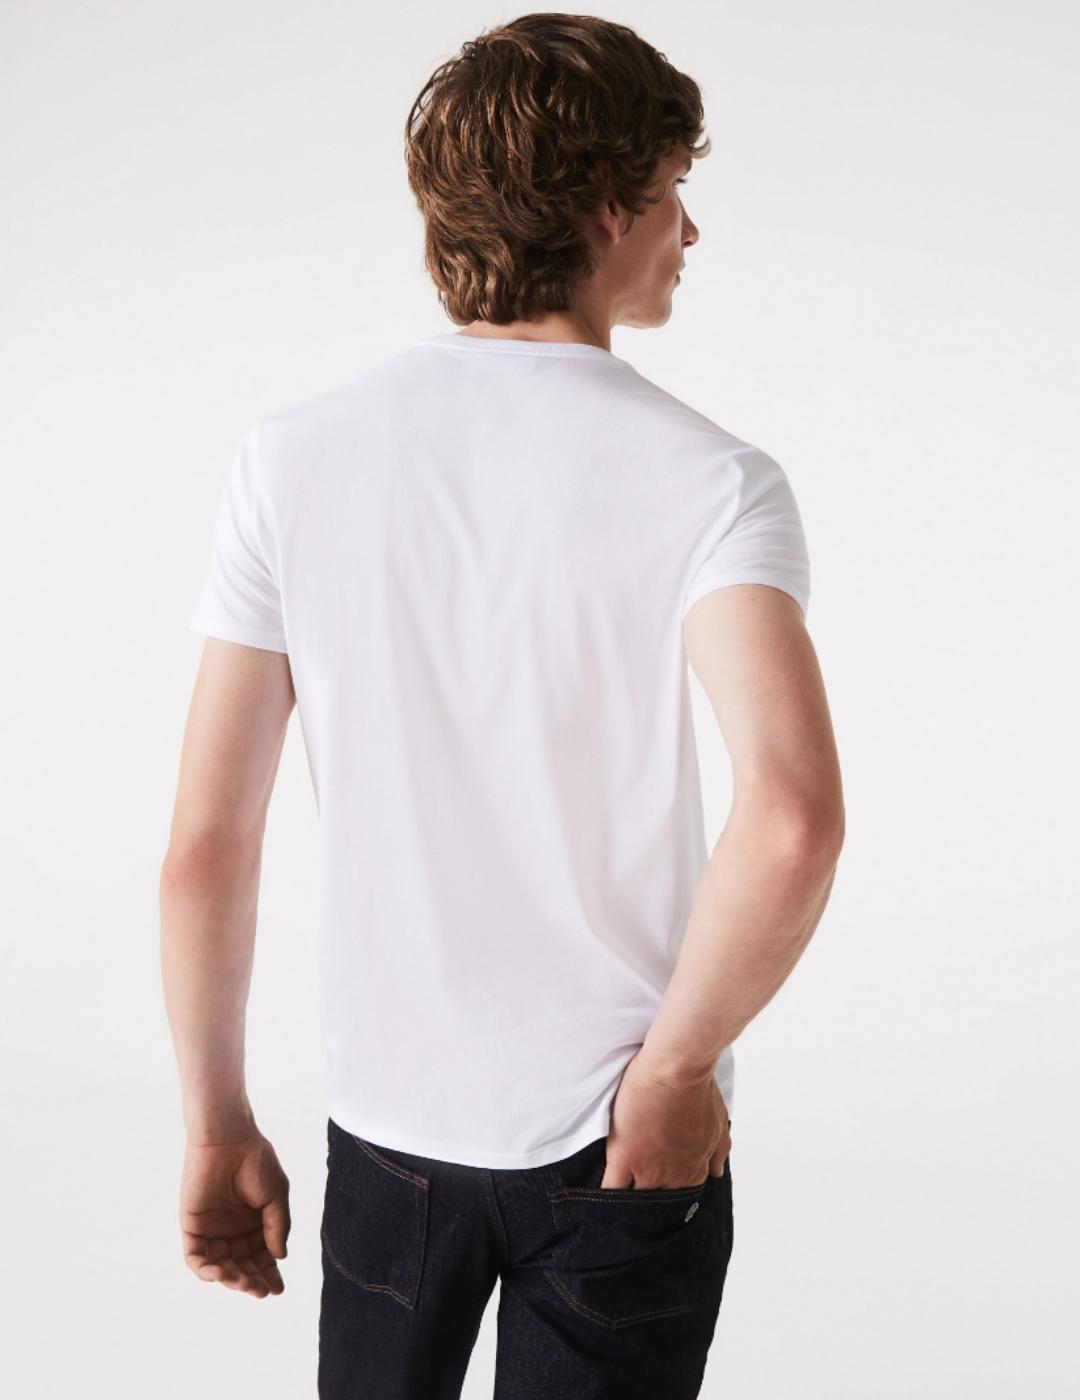 Camiseta básica Lacoste blanca para hombre- z